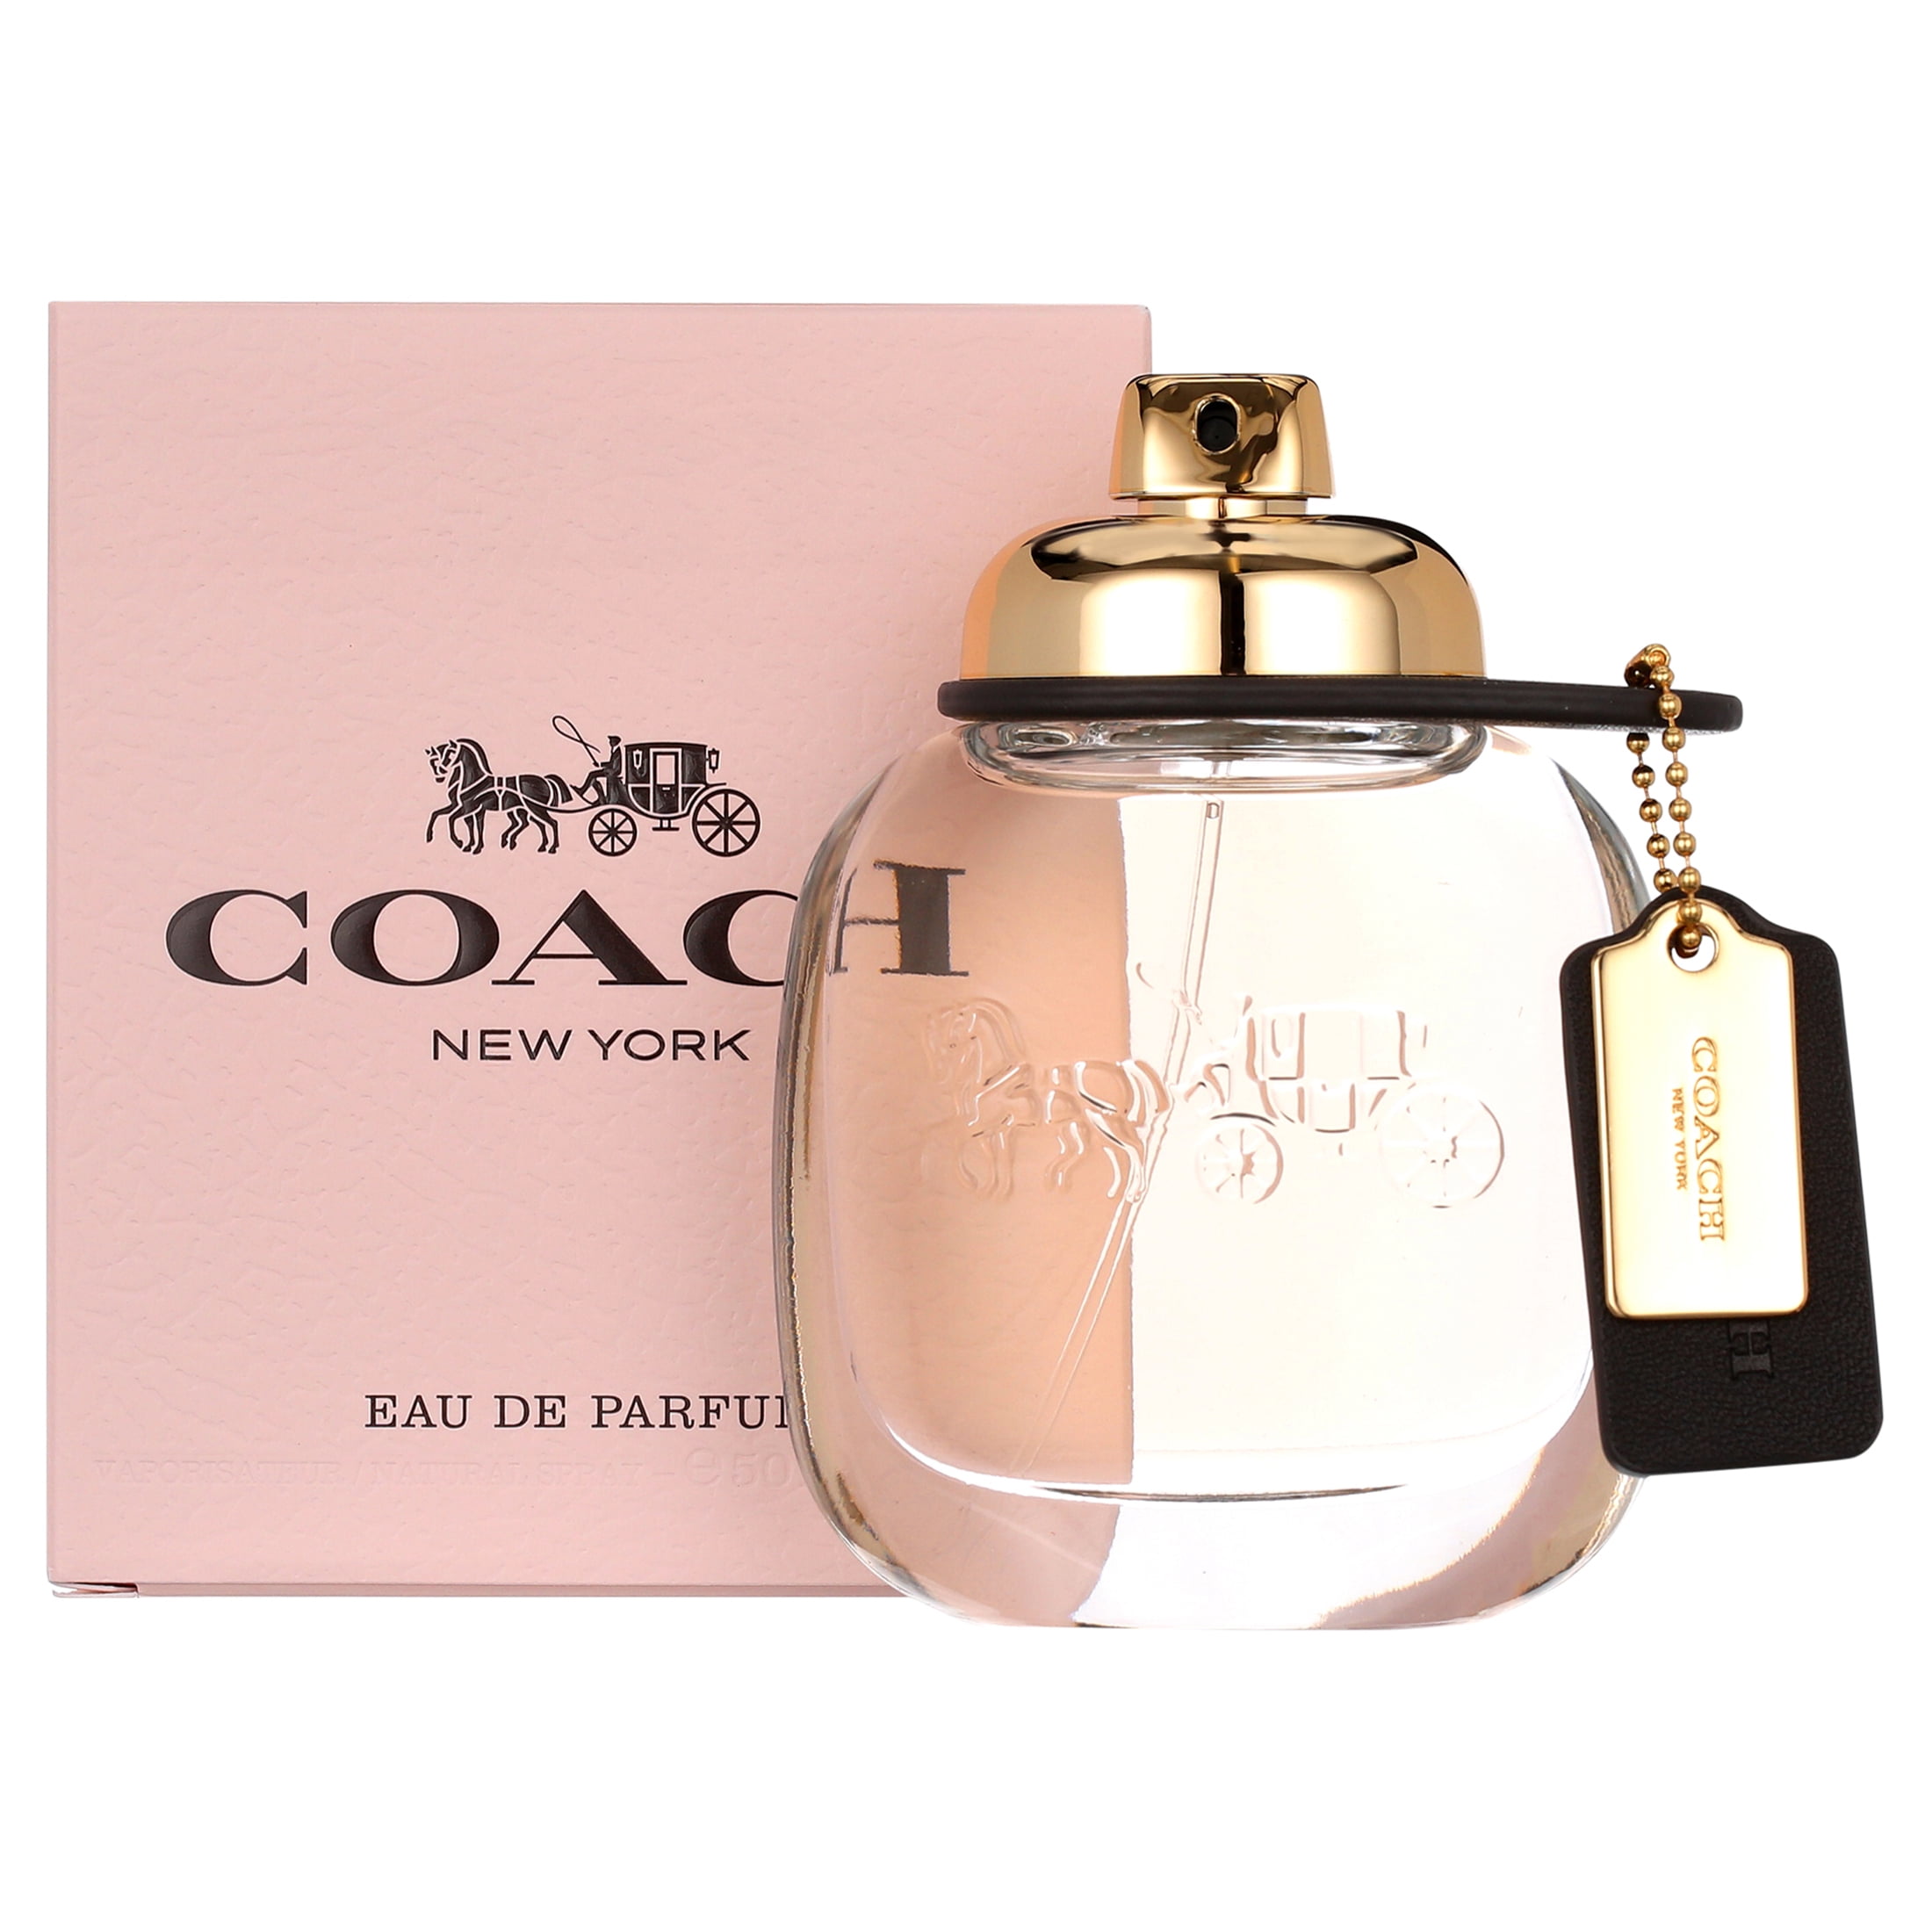 Coach by Coach 1.7 oz Eau de Parfum Spray / Women